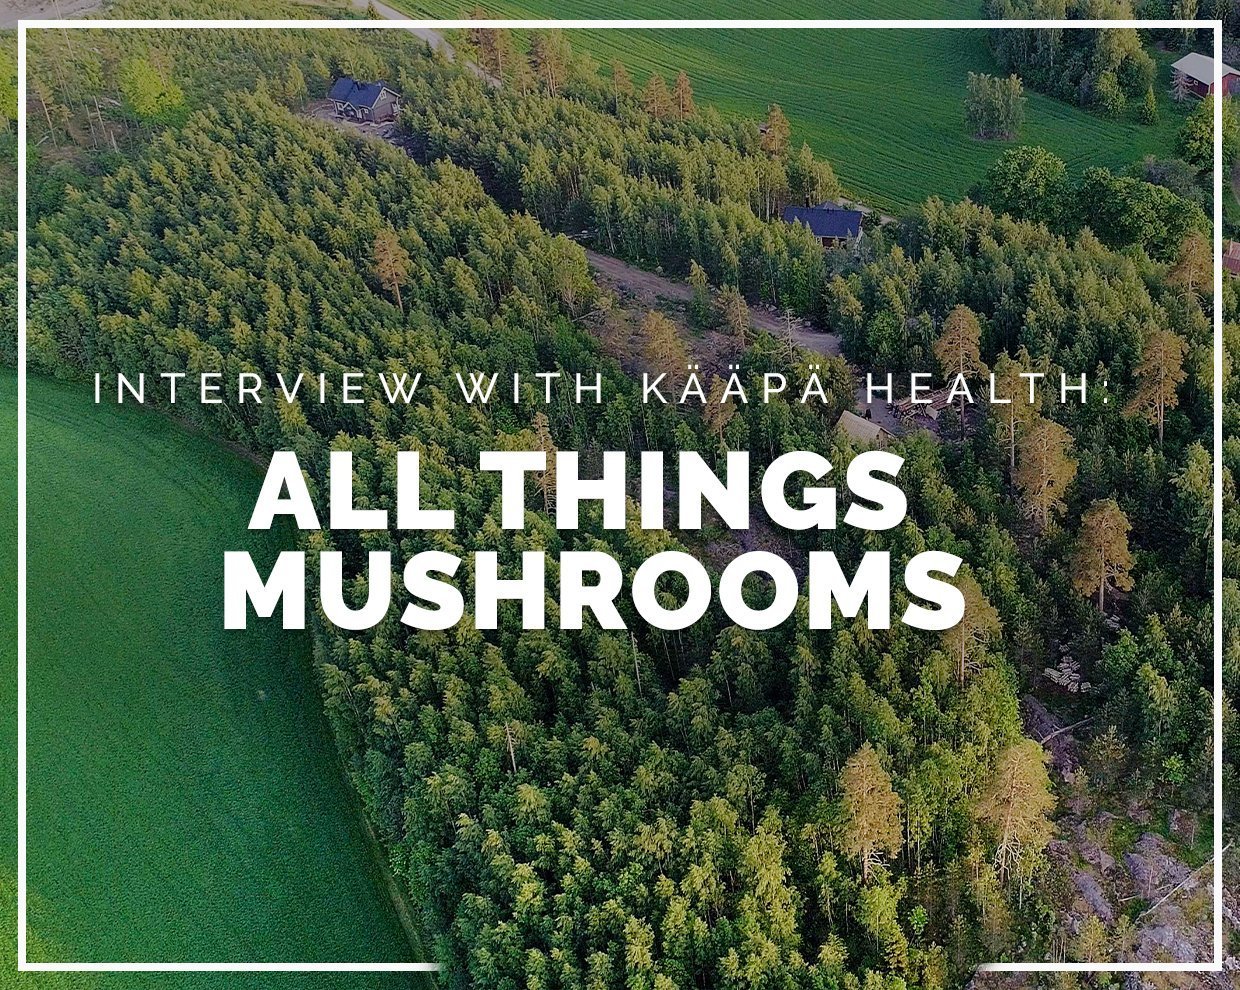 INTERVIEW WITH KÄÄPÄ HEALTH: All things mushrooms 